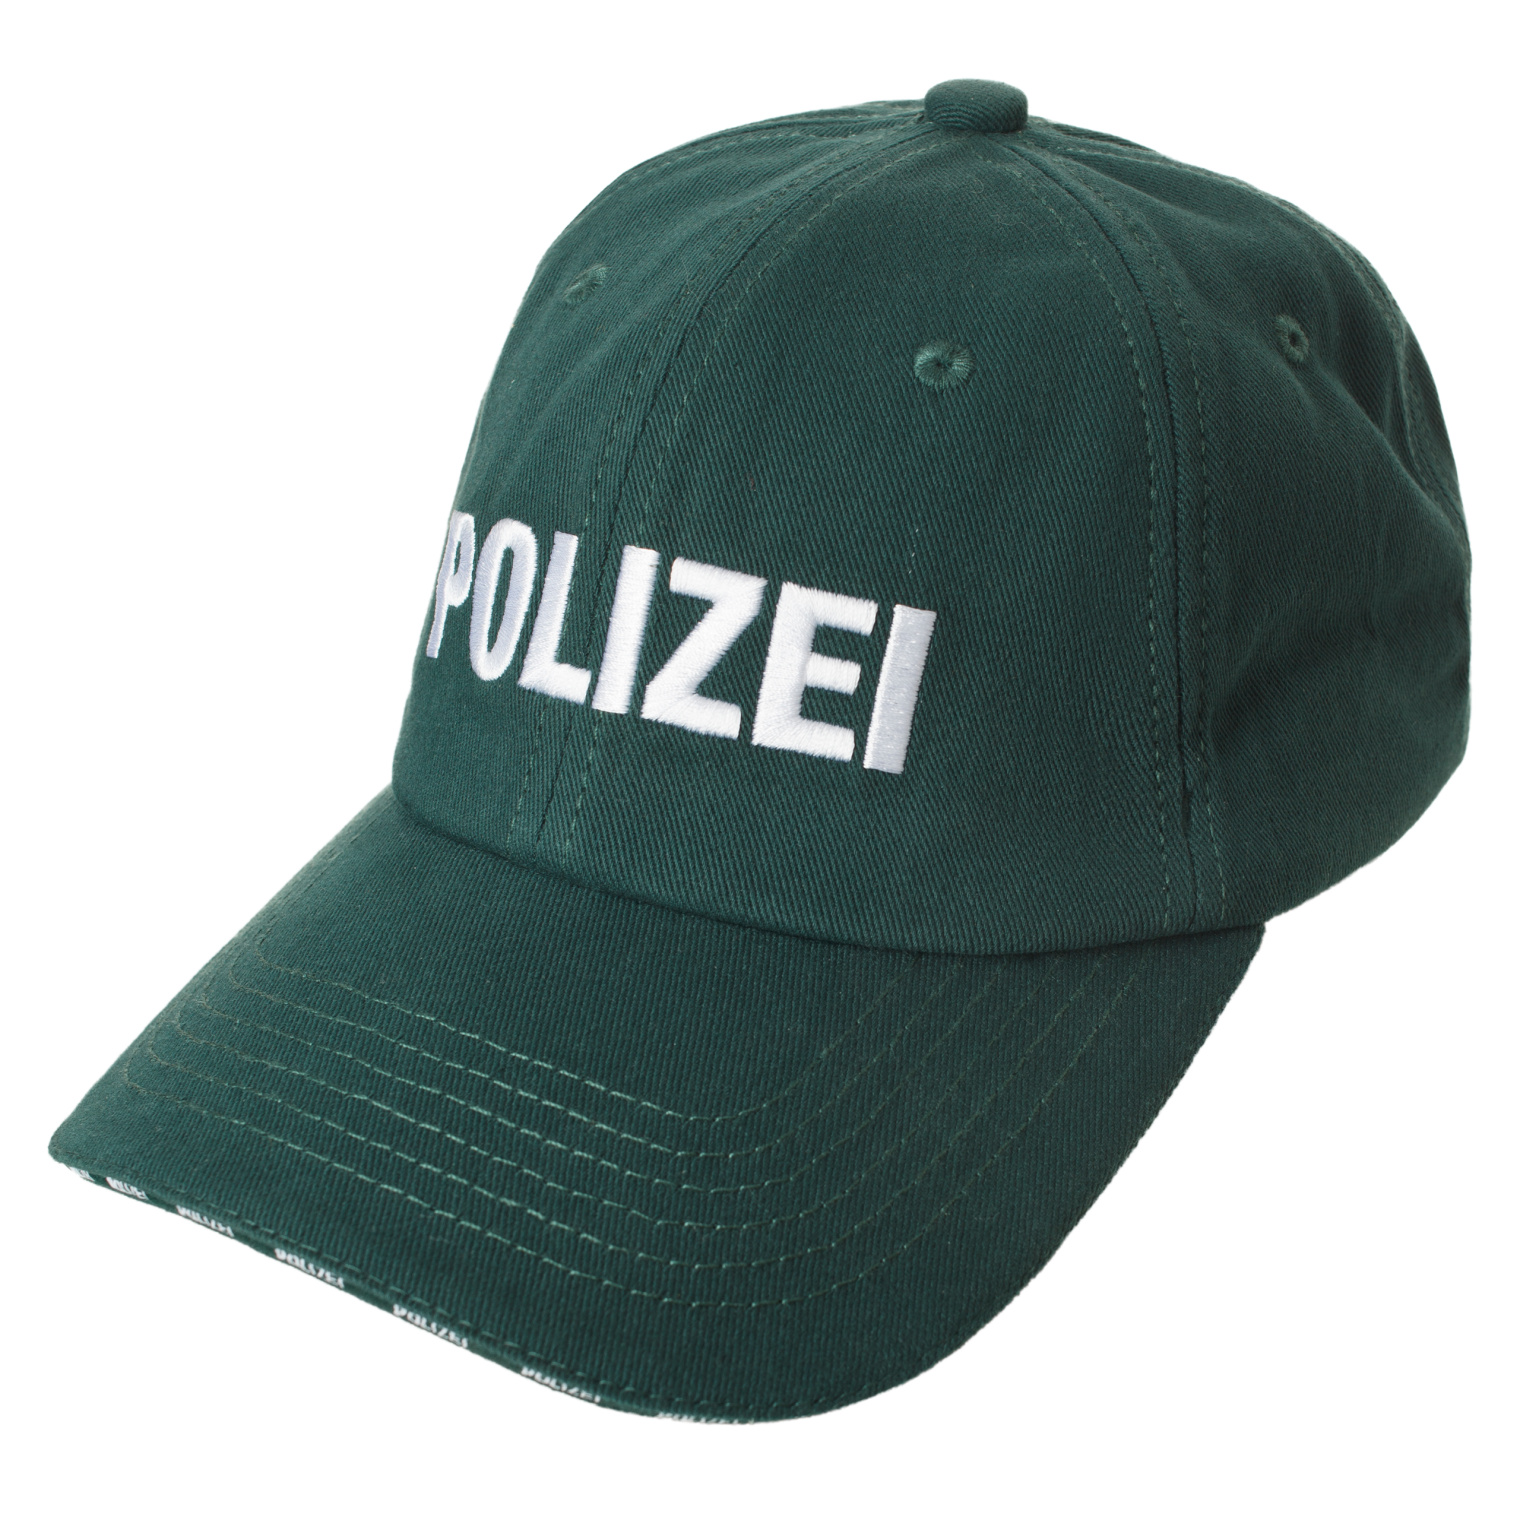 VETEMENTS Polizei embroidered cap